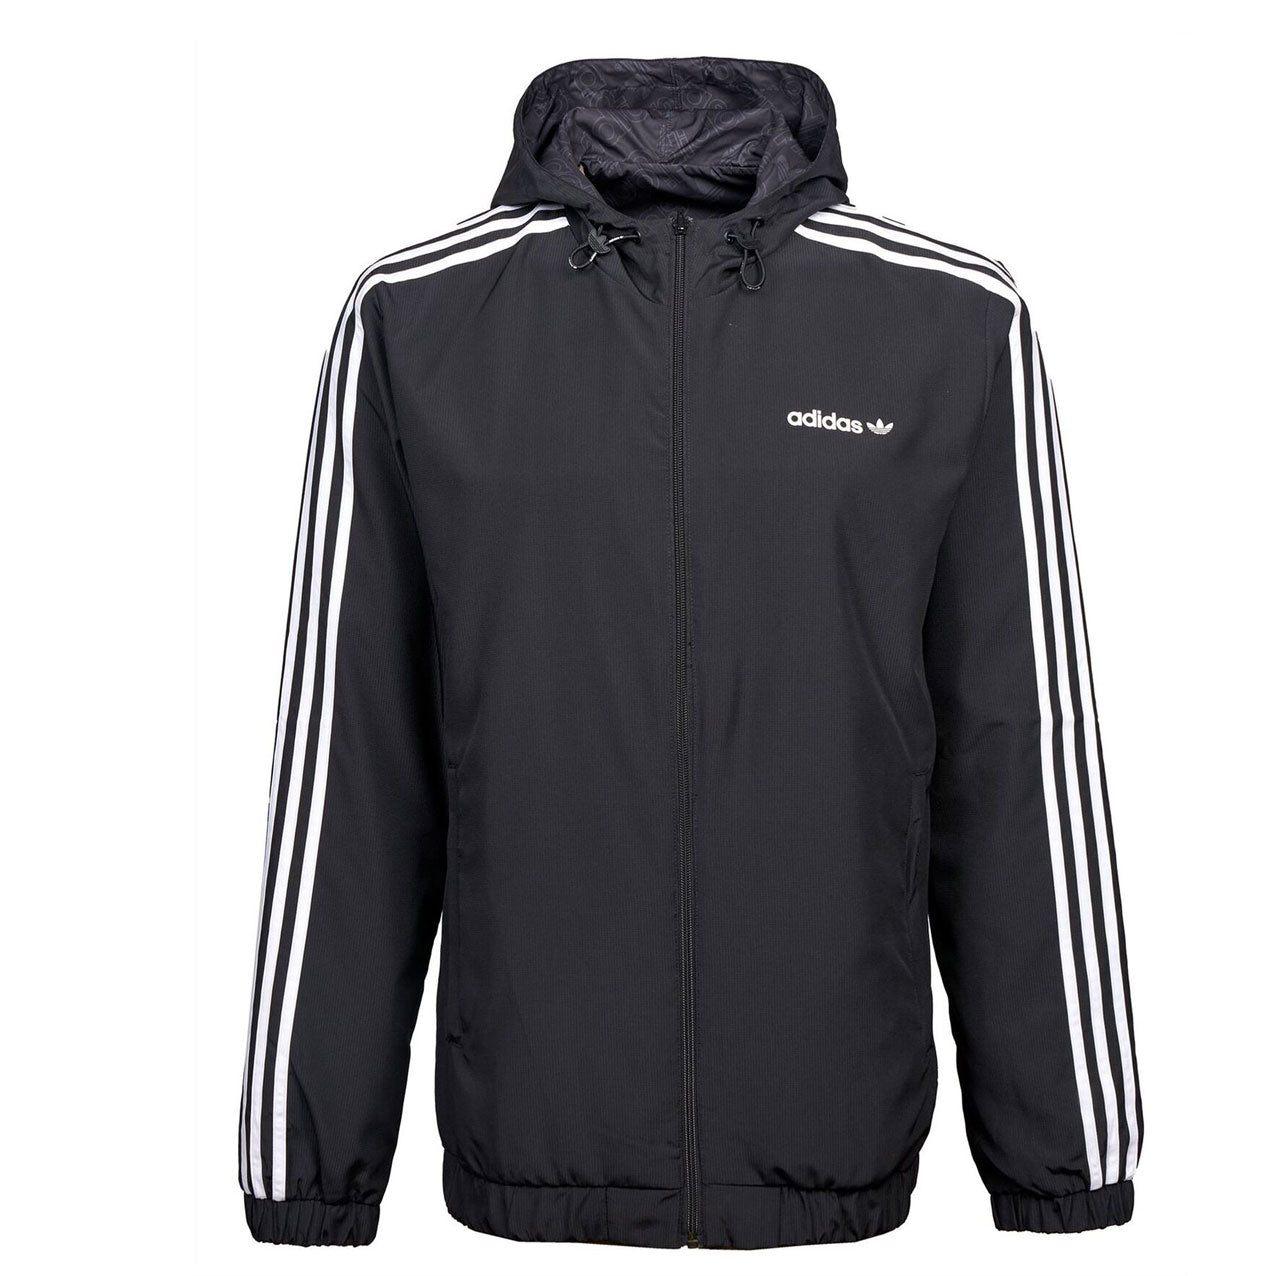 Adidas Jacket Hooded Mens Jacket Running Reversible Jacket Black ZX Jacket - MRGOUTLETS